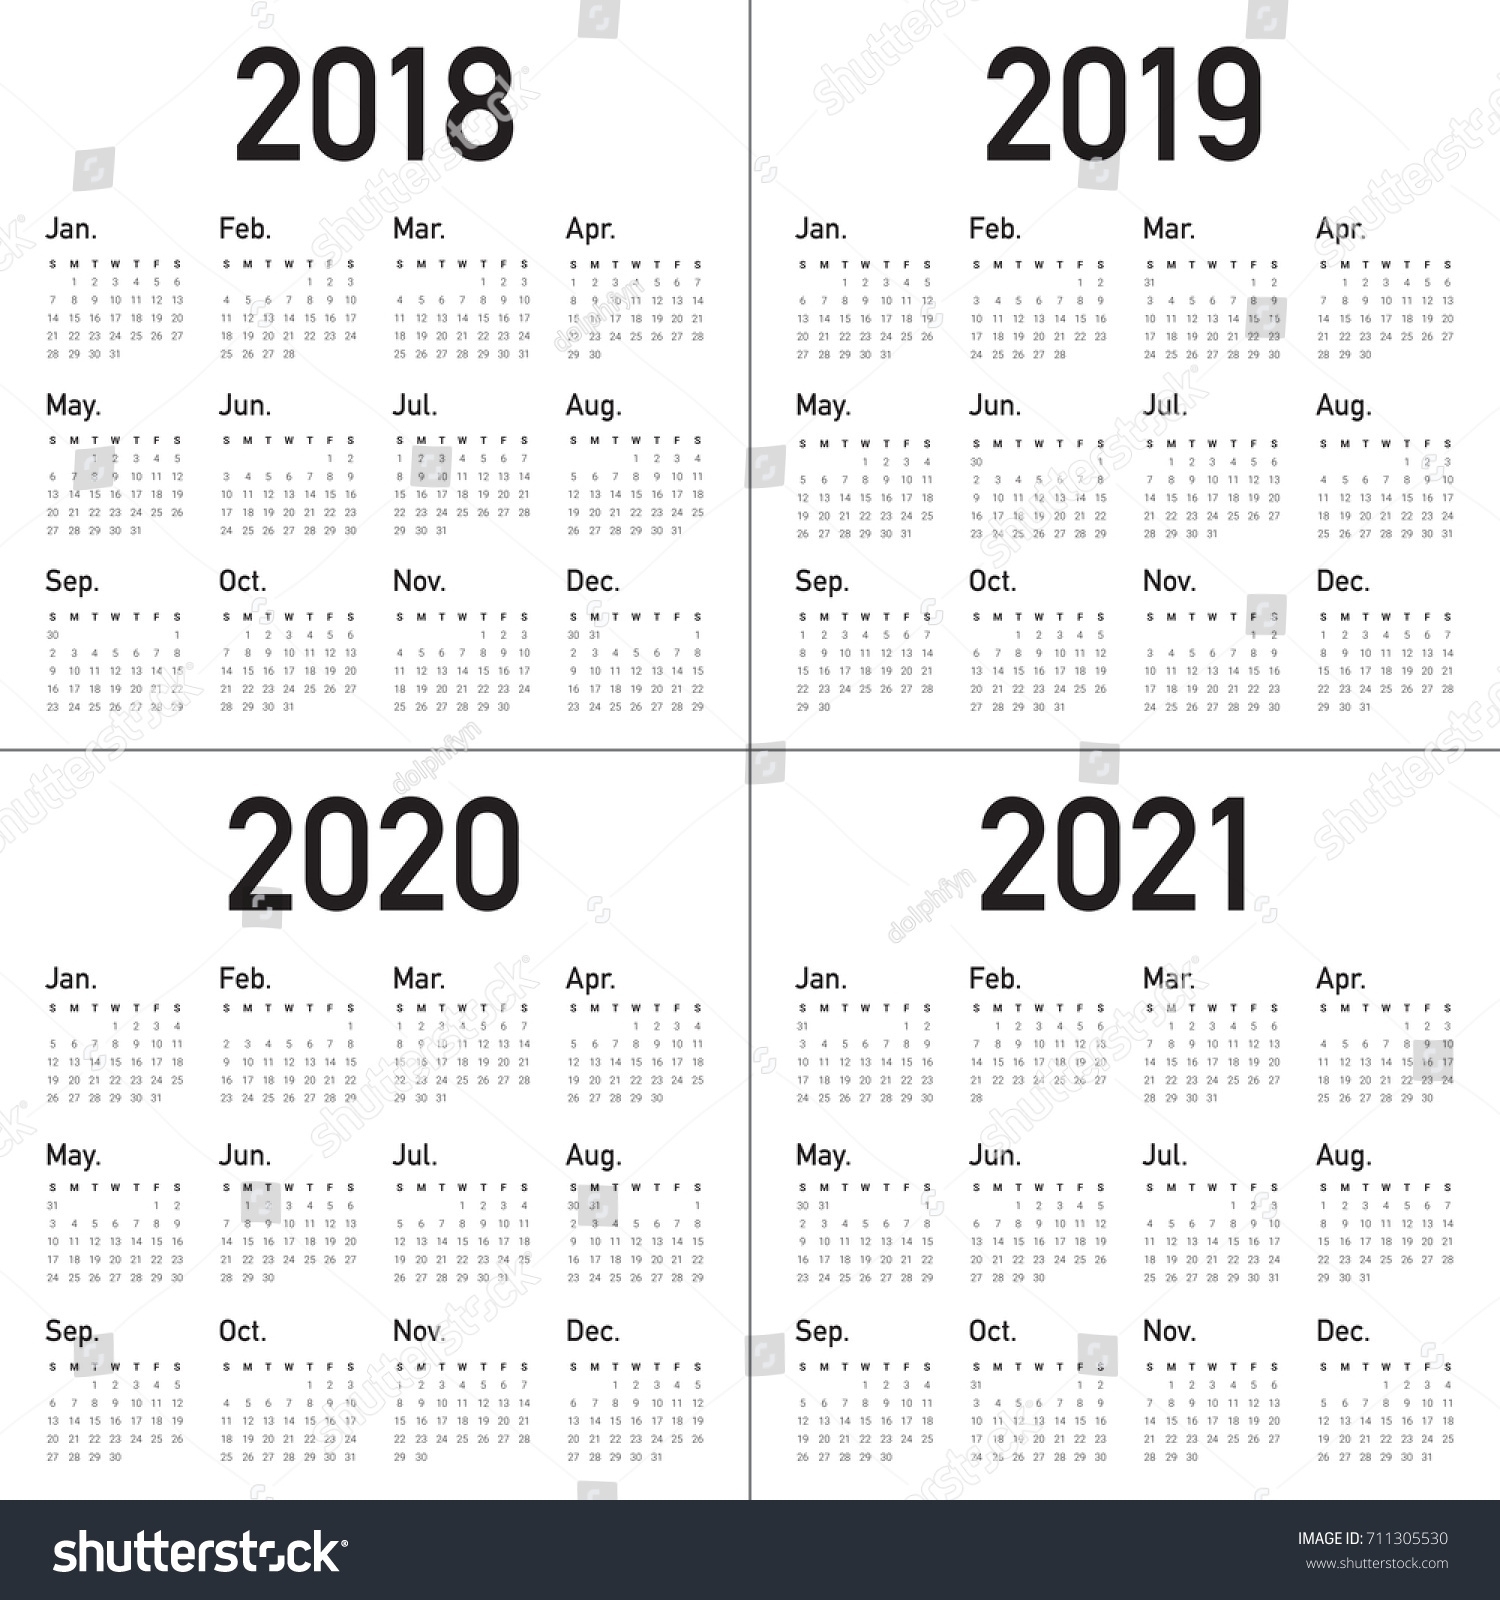 Printable 3 Year Calendar 2019 To 2021 | Printable Calendar 2019 with regard to 3 Year Printable Calendar 2019 2020 2021